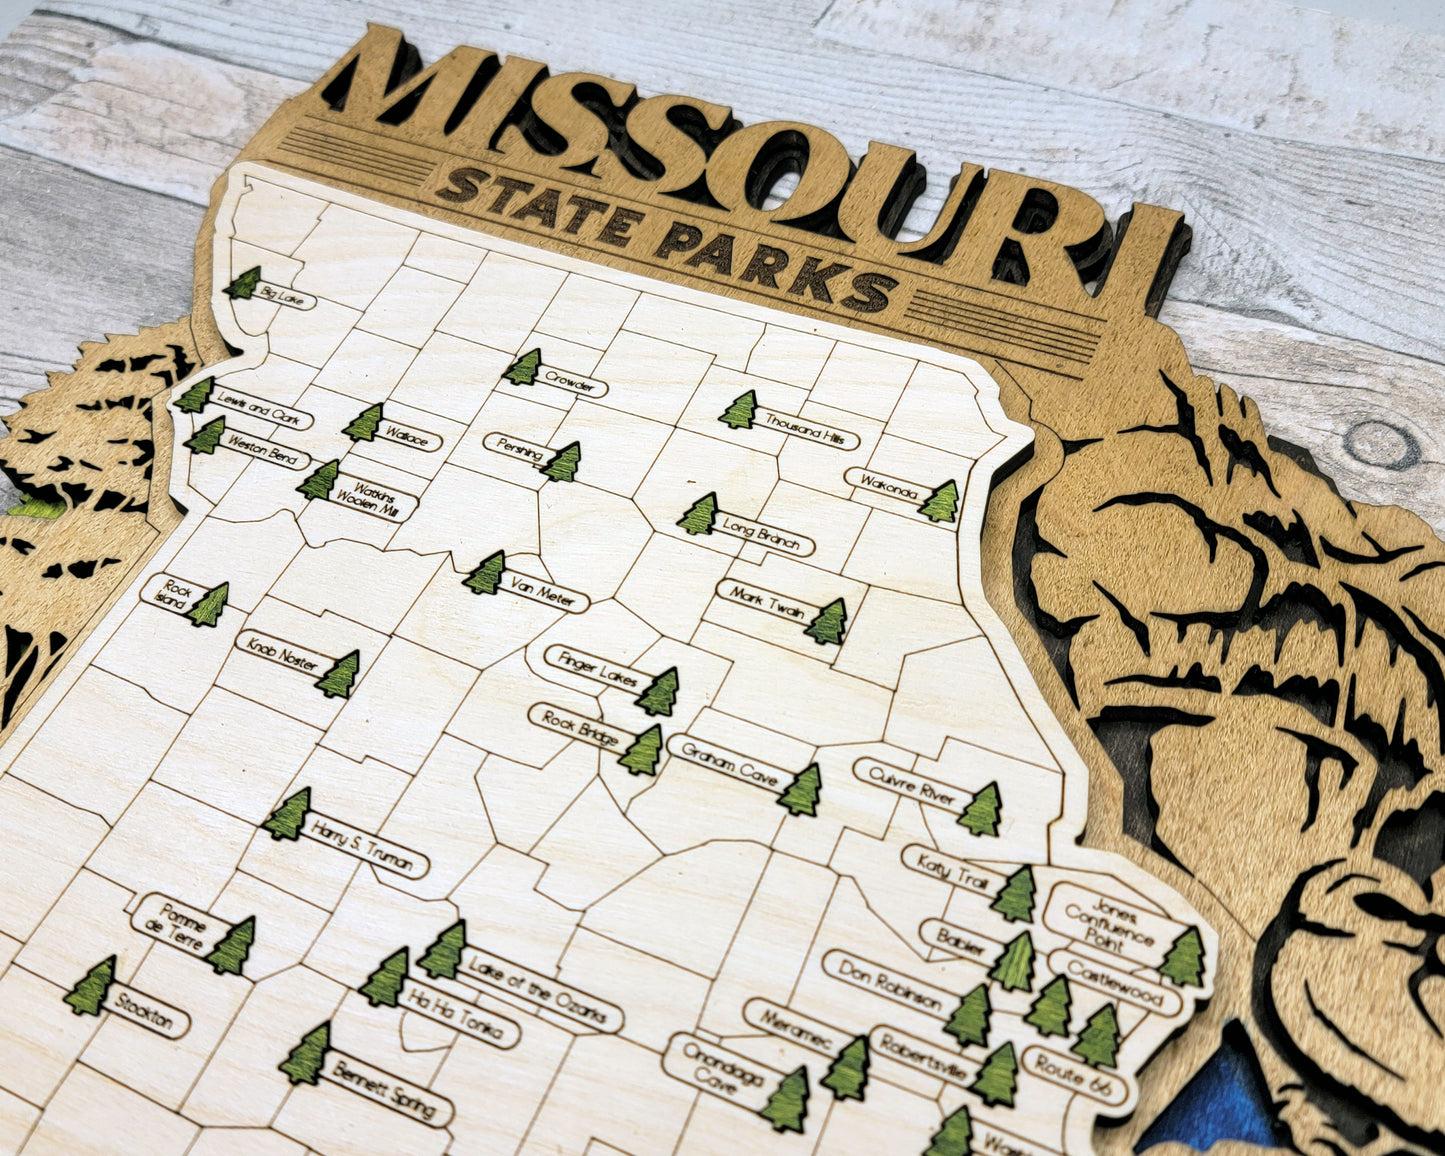 Missouri State Park Travel Map